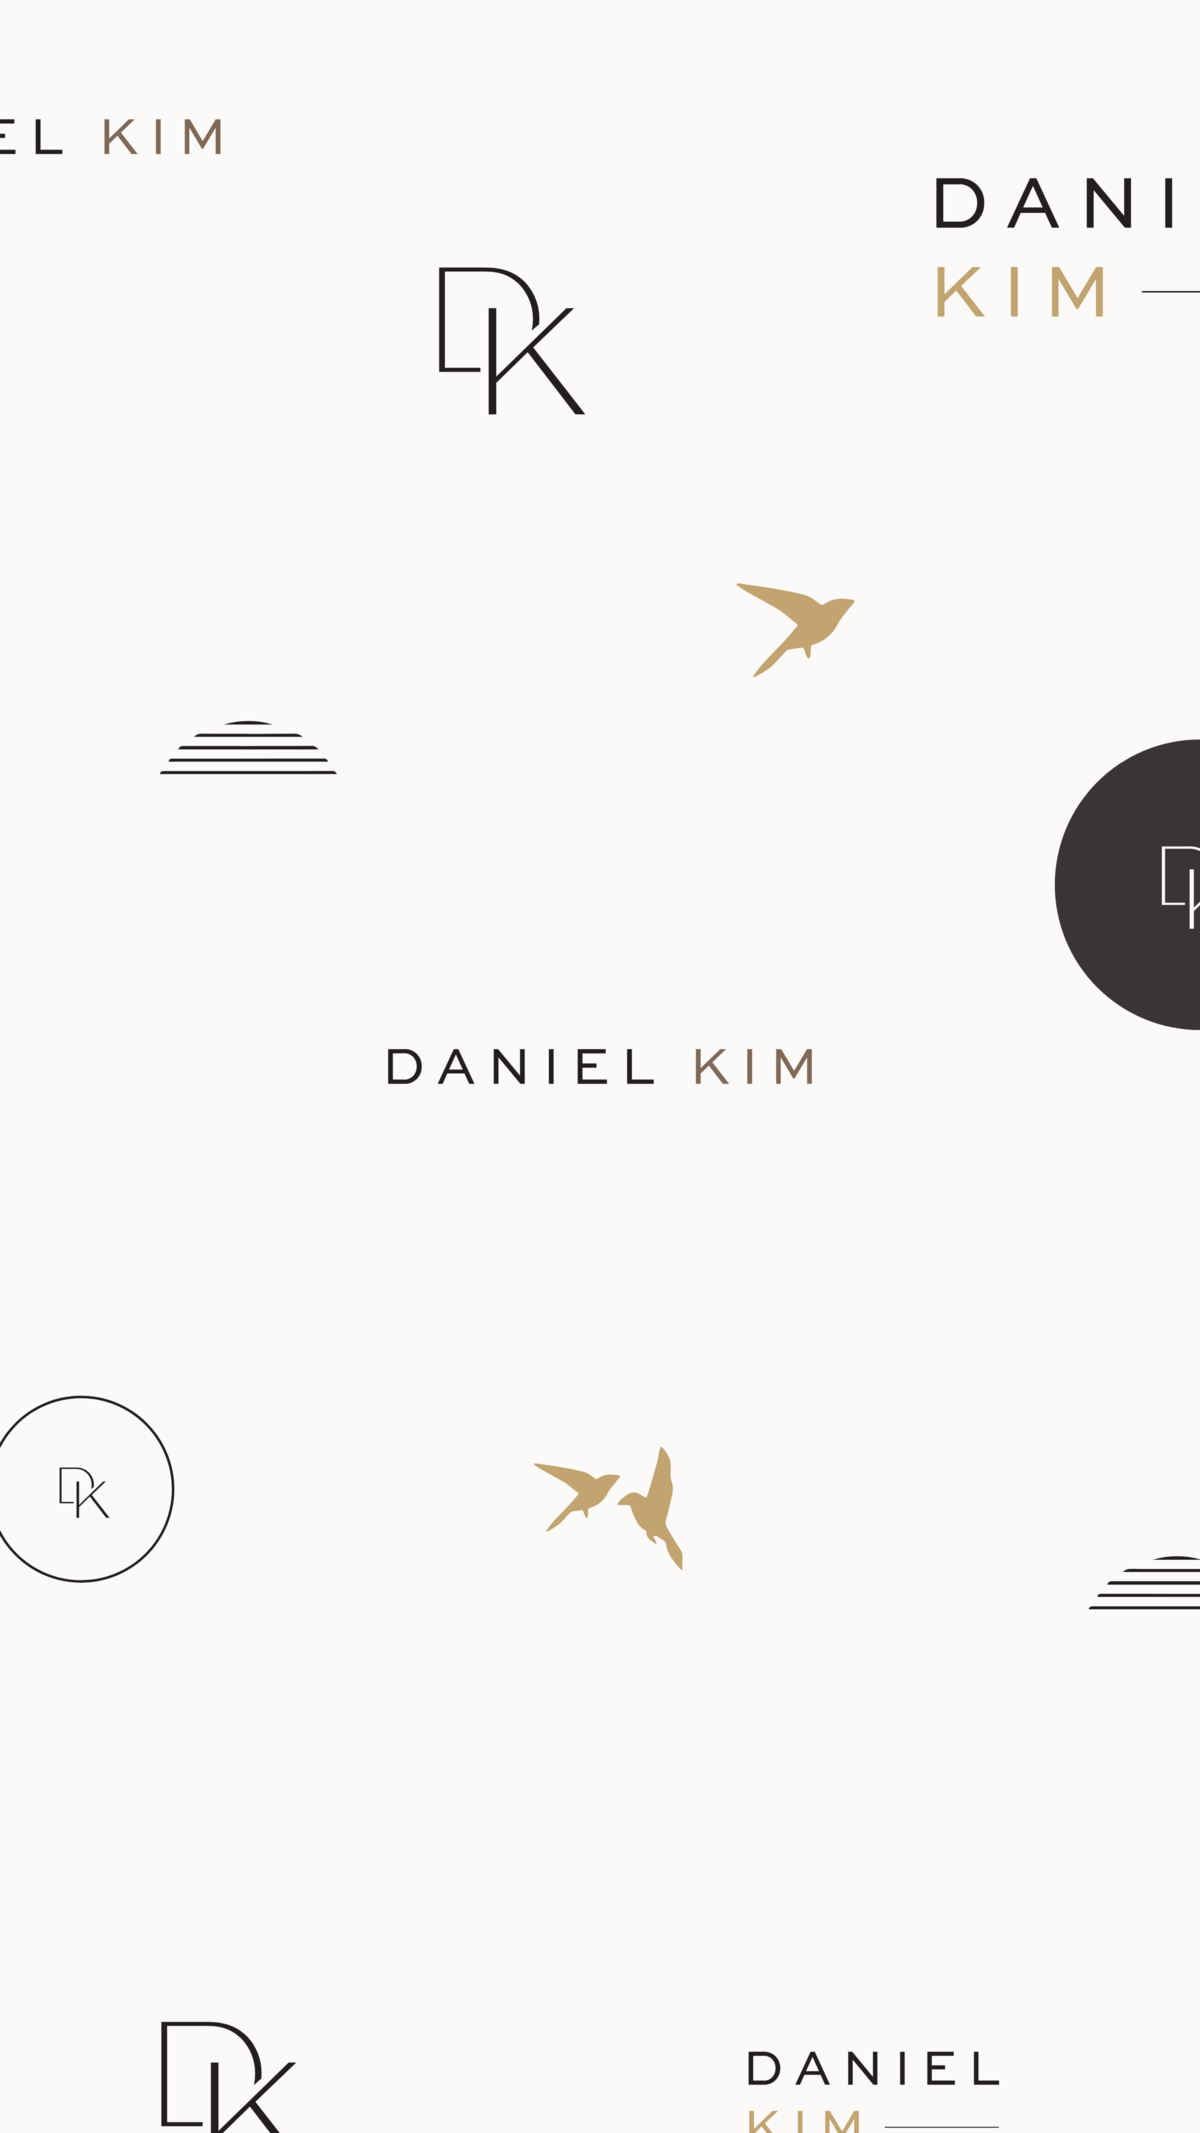 Foil & Ink_ Daniel Kim branding and website design  (11)